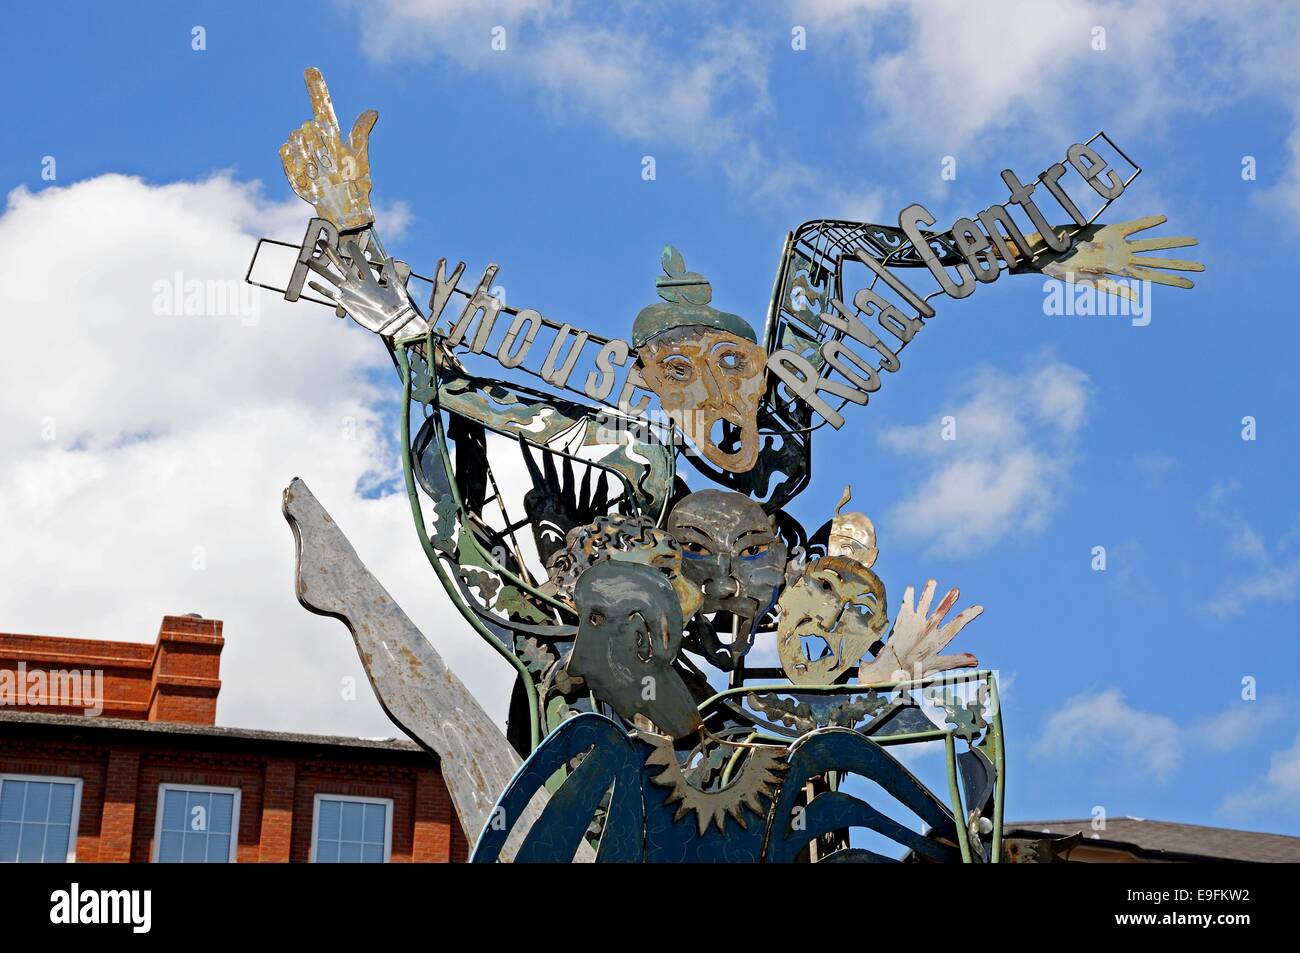 Escultura en metal publicidad Teatro Playhouse, Nottingham, Nottinghamshire, Inglaterra, Reino Unido, Europa Occidental. Foto de stock